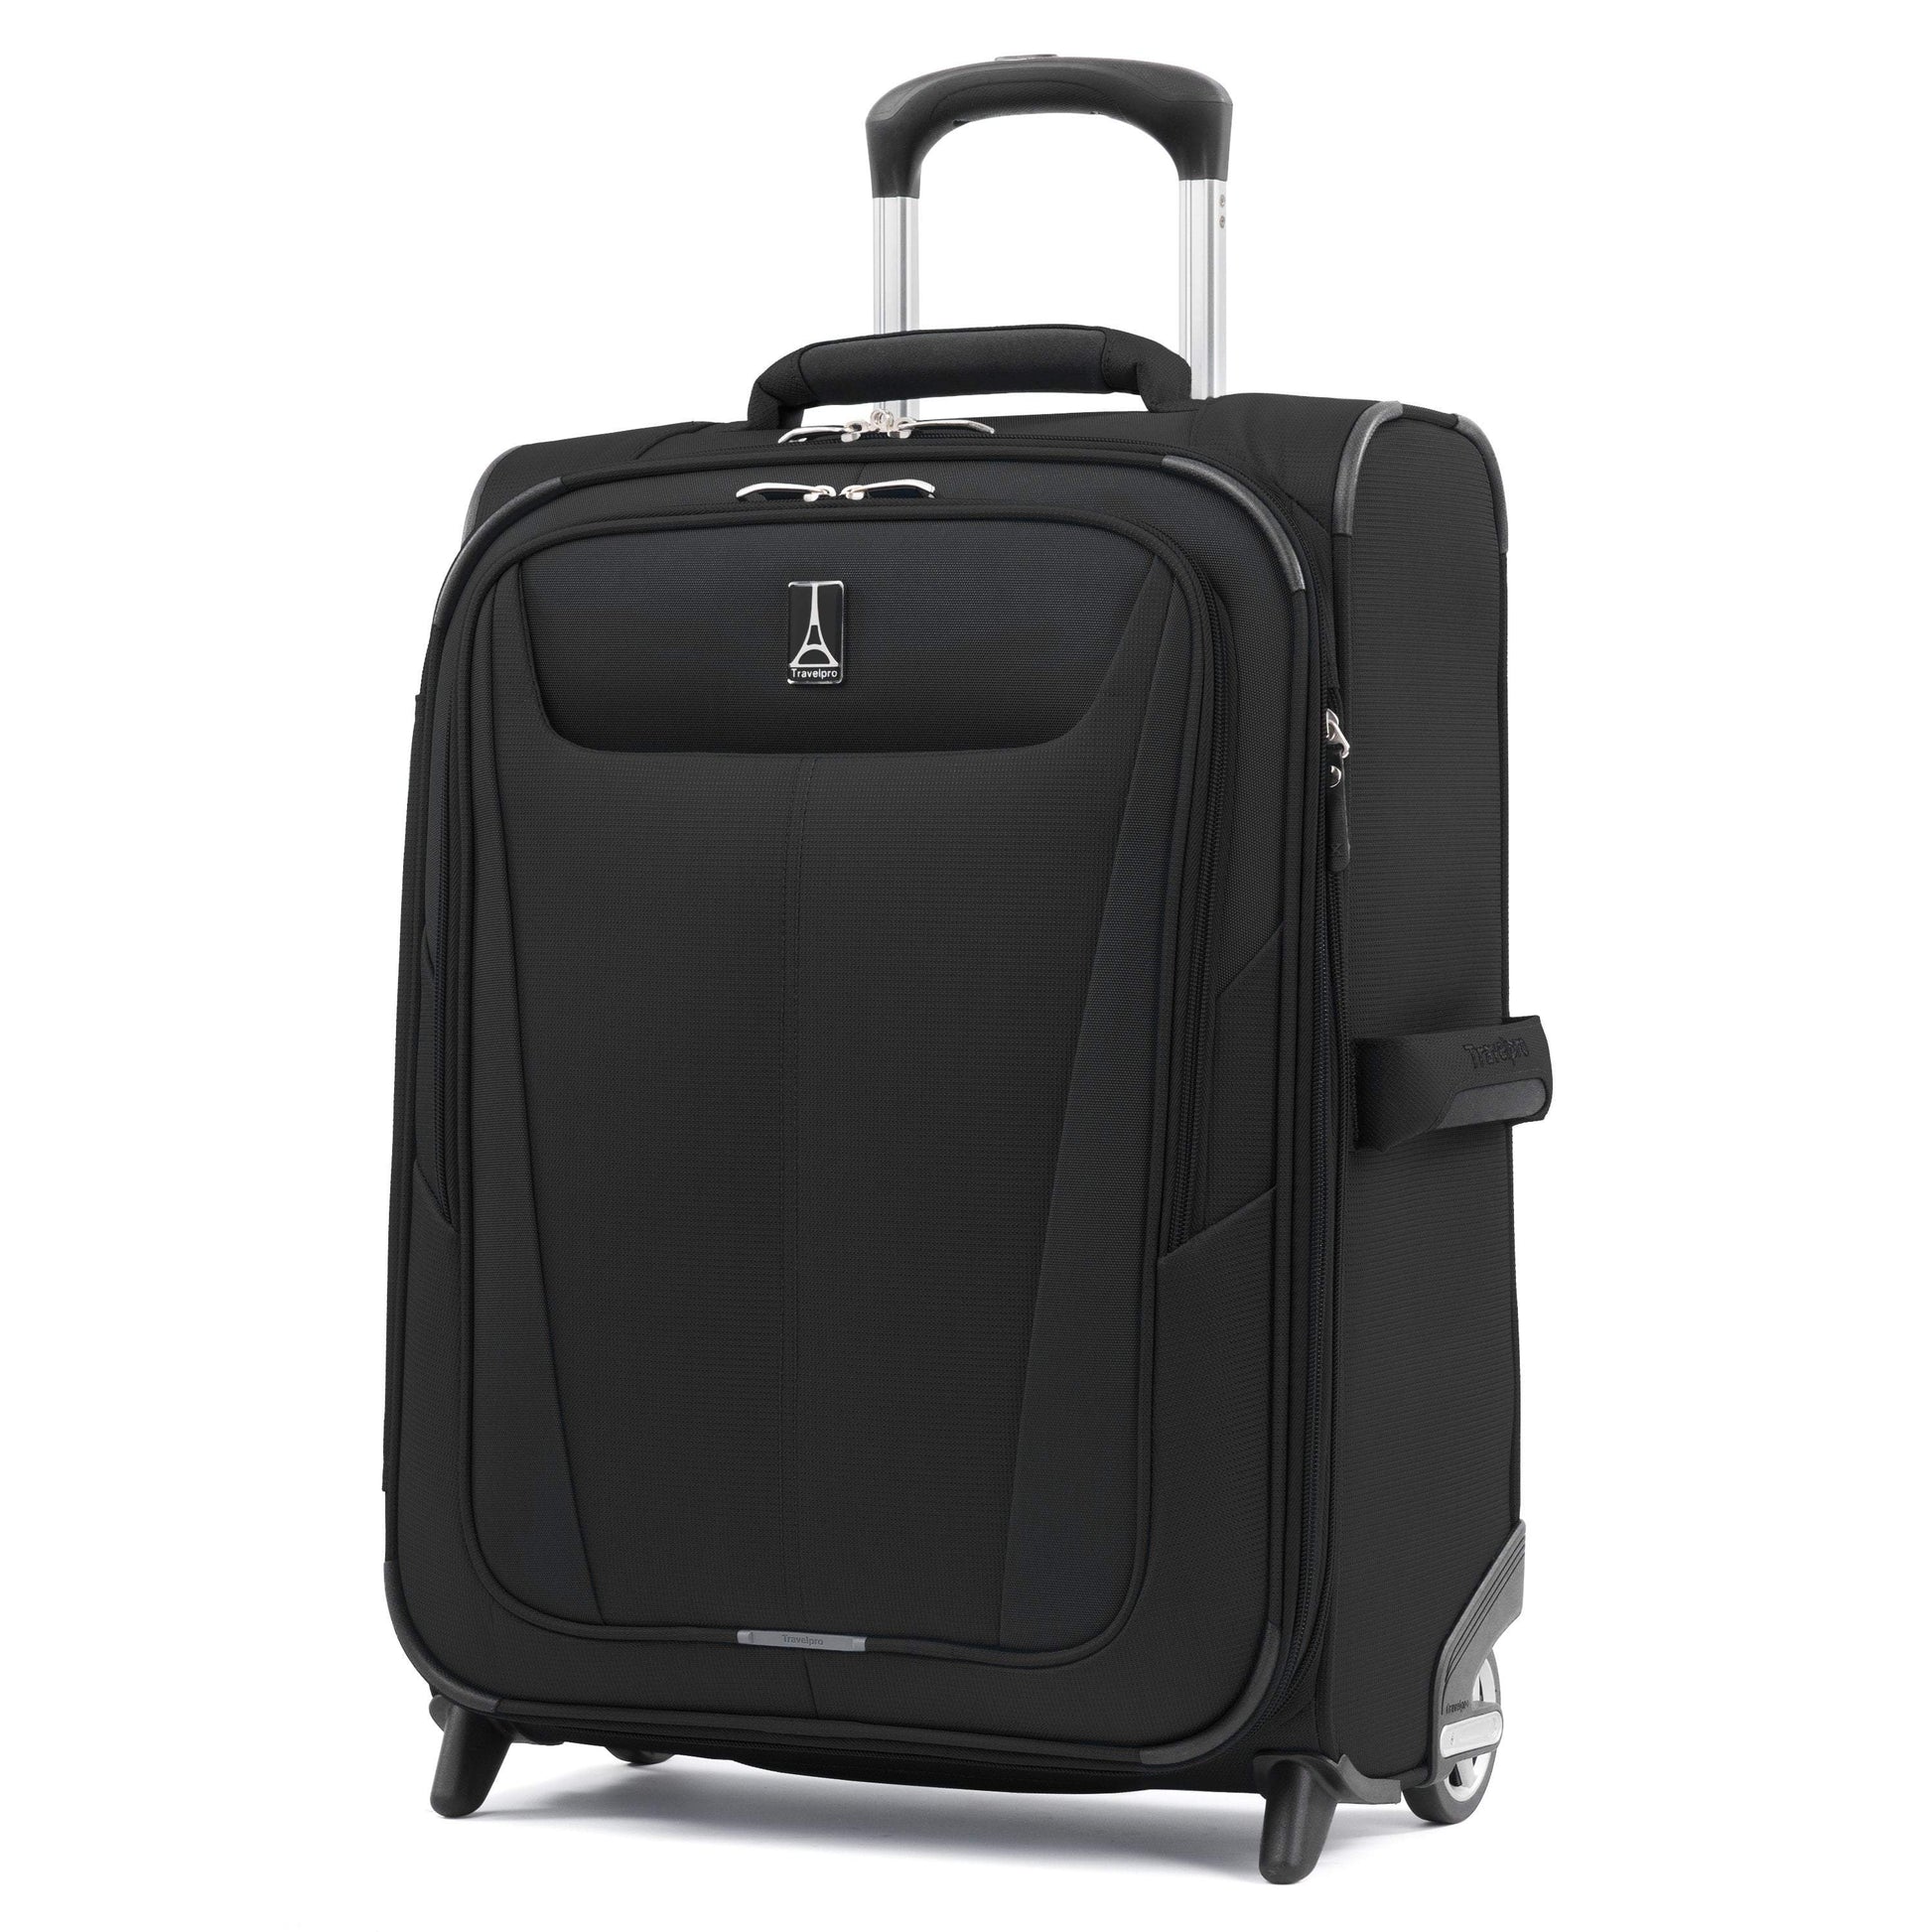 Travelpro Maxlite 5 International Carry-On Roallaboard Luggage - Black